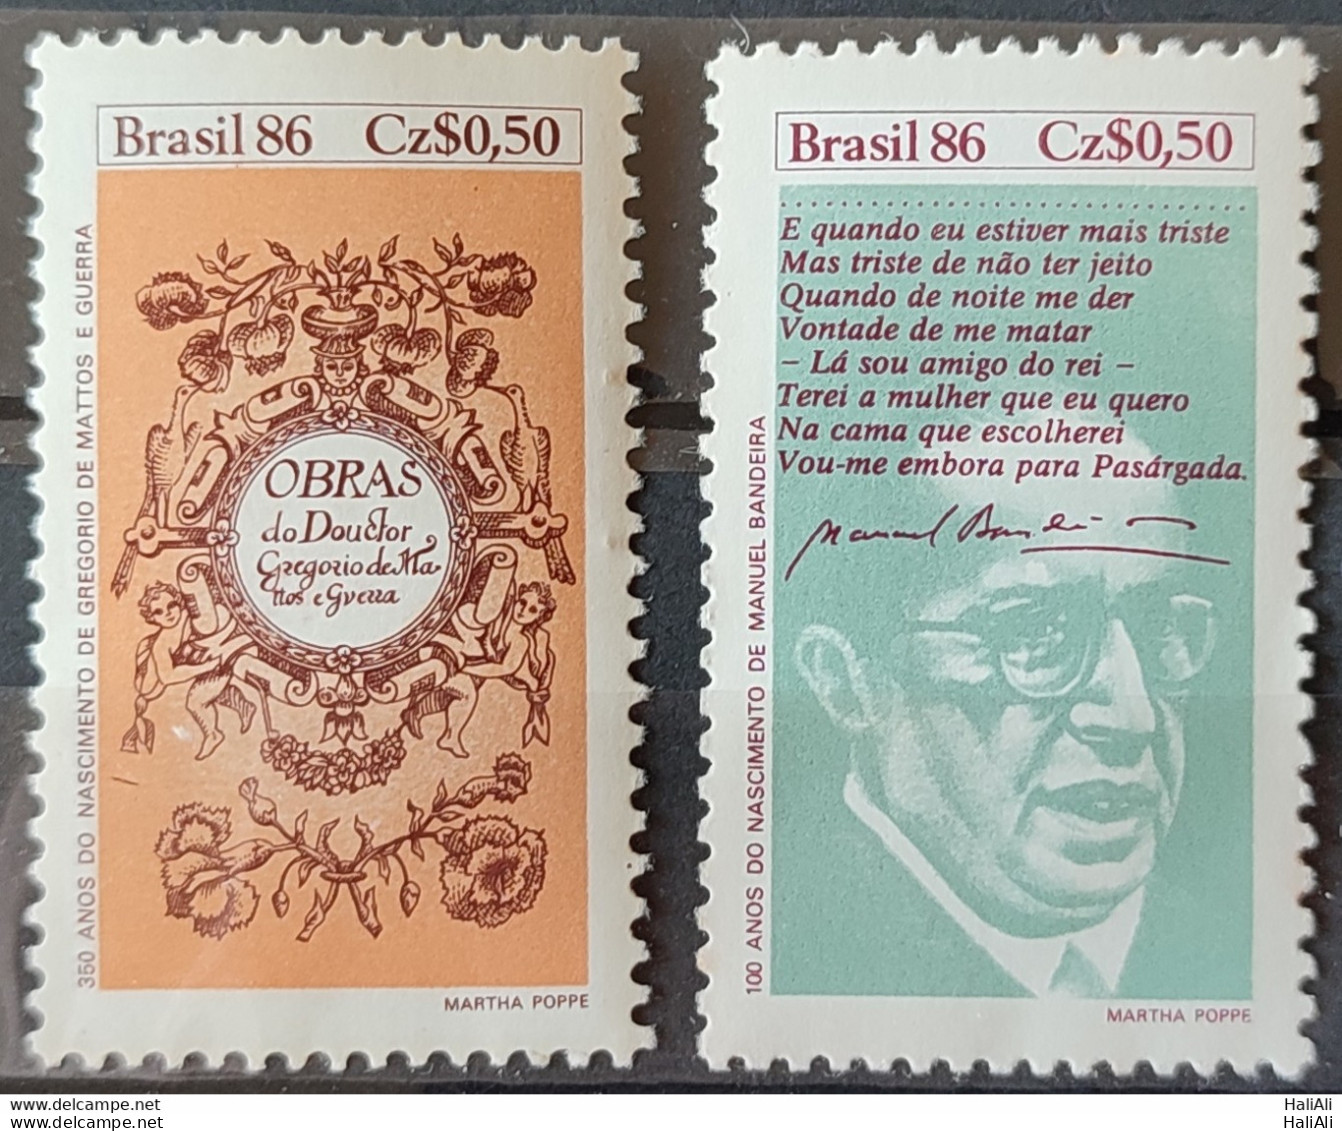 C 1527 Brazil Stamp Book Day Literature Gregorio De Mattos Guerra Manuel Bandeira 1986 Complete Series.jpg - Unused Stamps